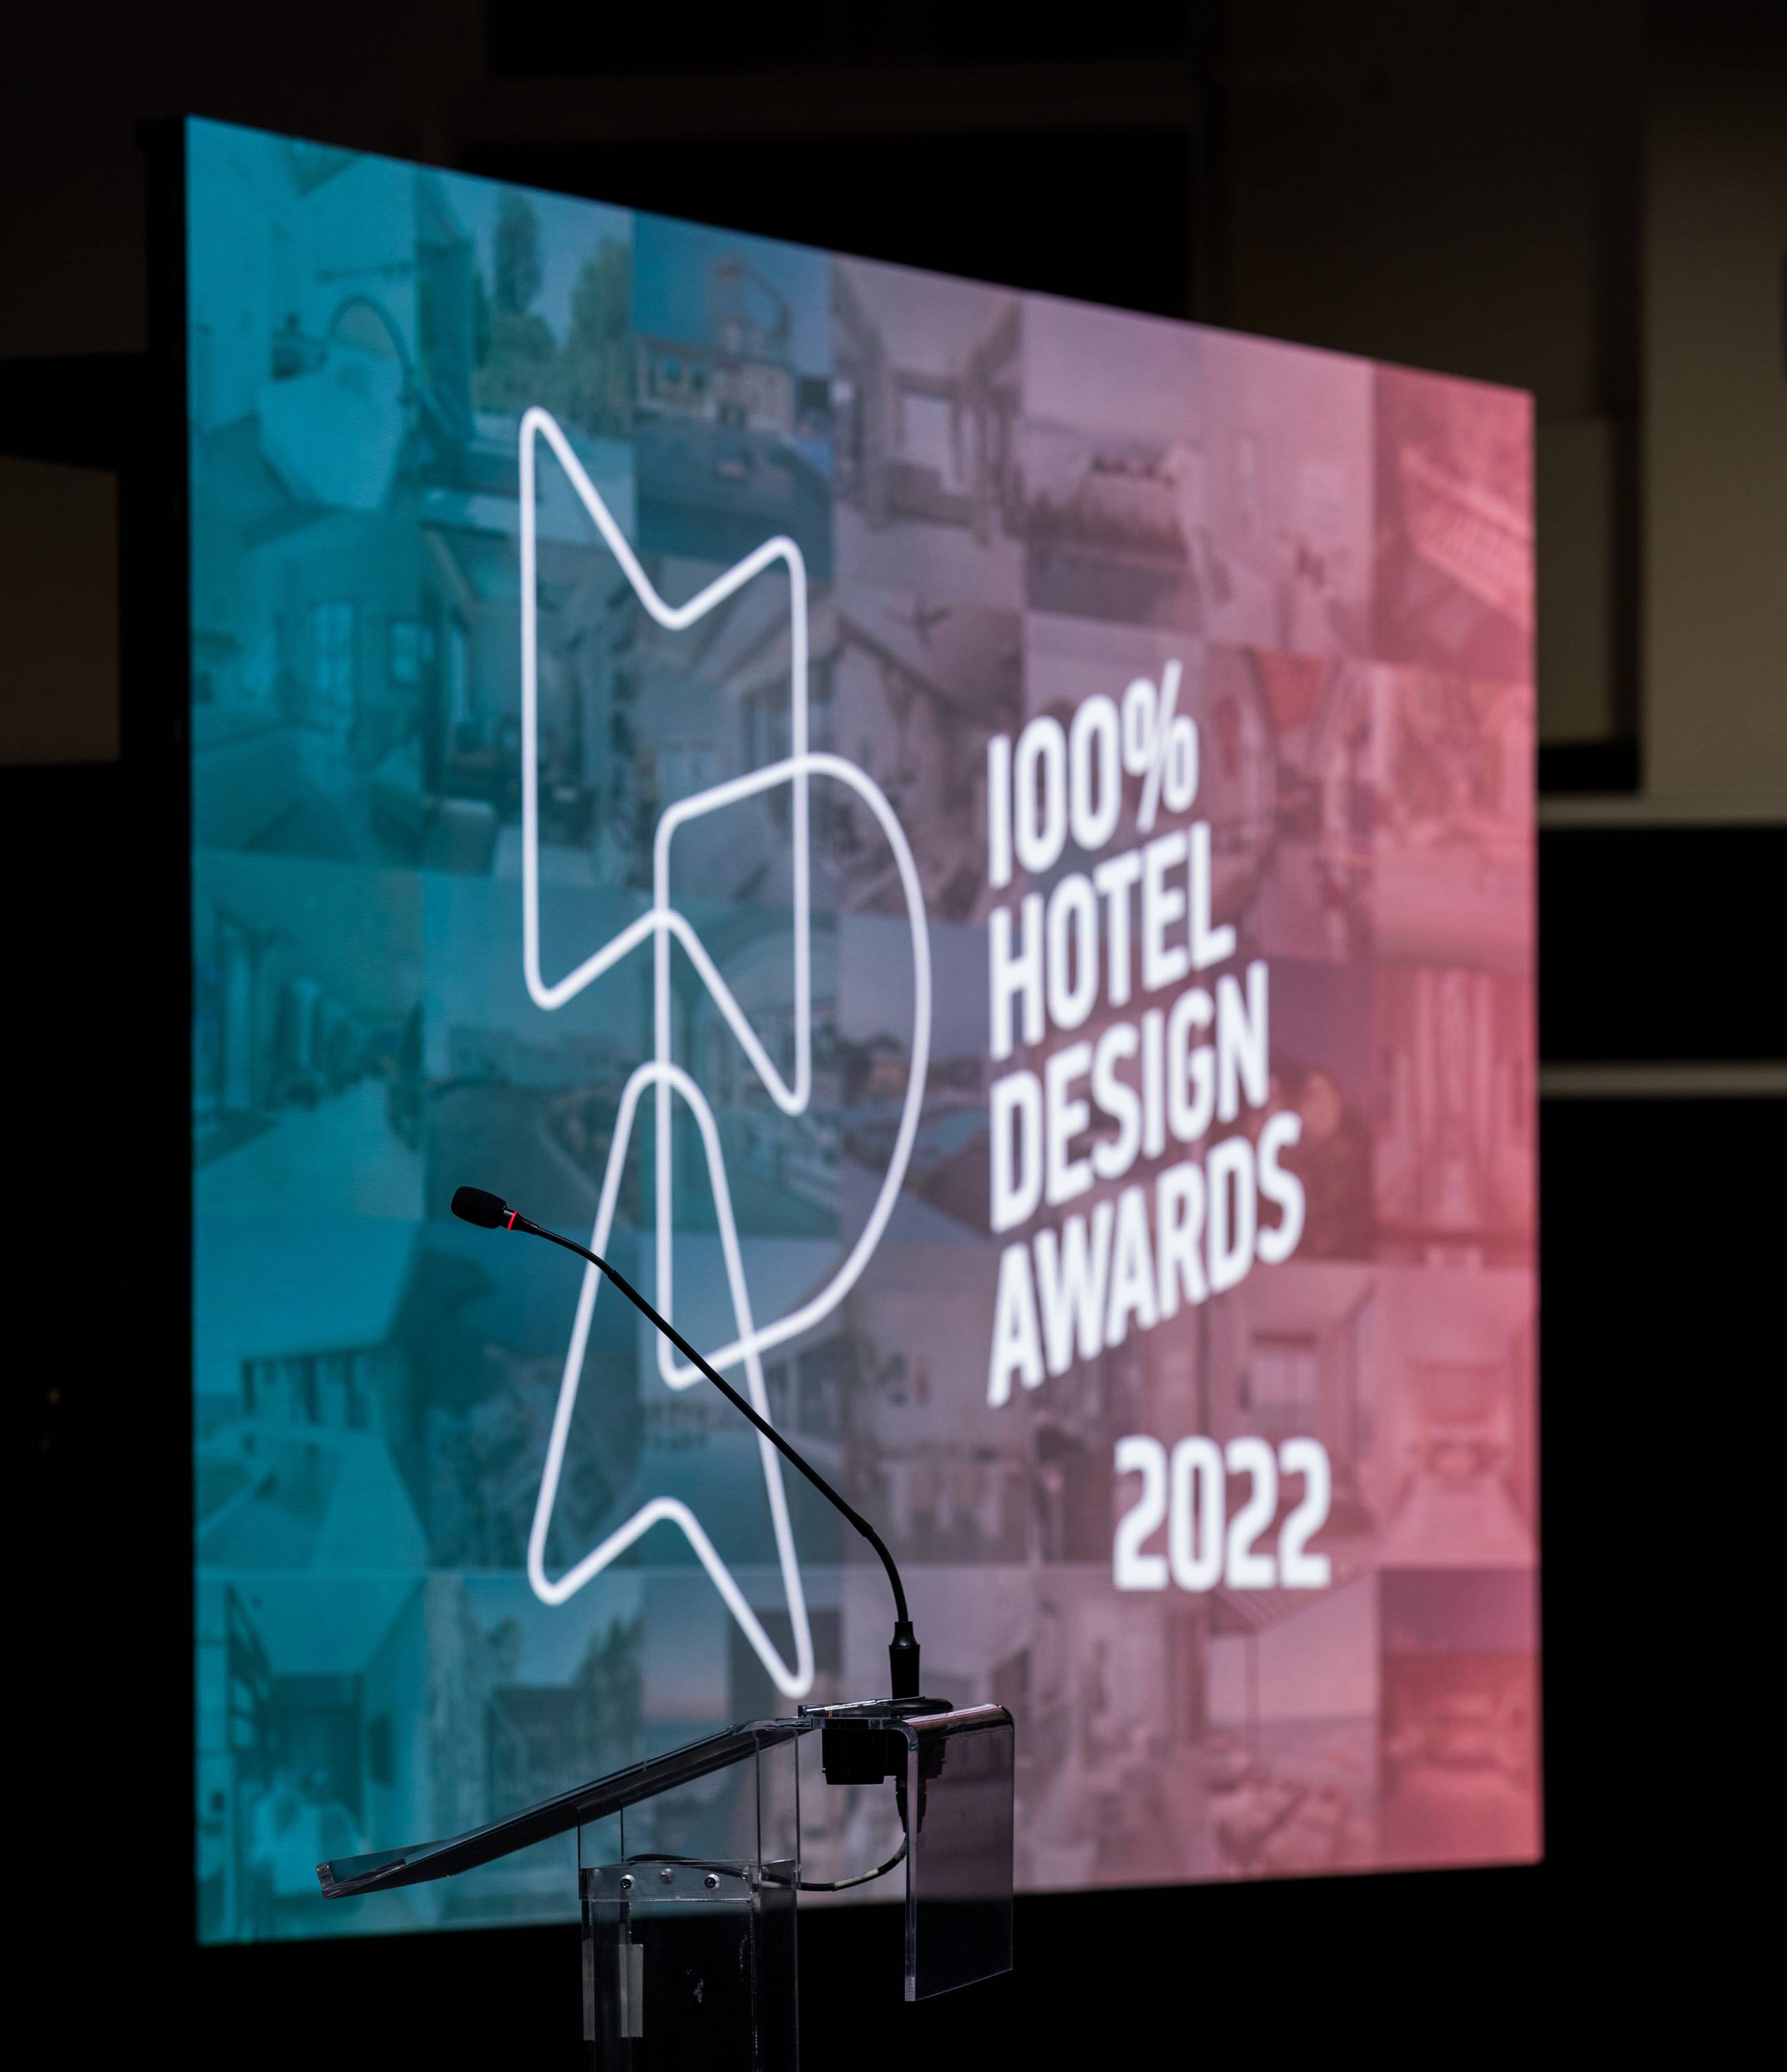 100% Hotel Design Awards 2022: Η λαμπερή Τελετή Απονομής και οι Νικητές των Βραβείων